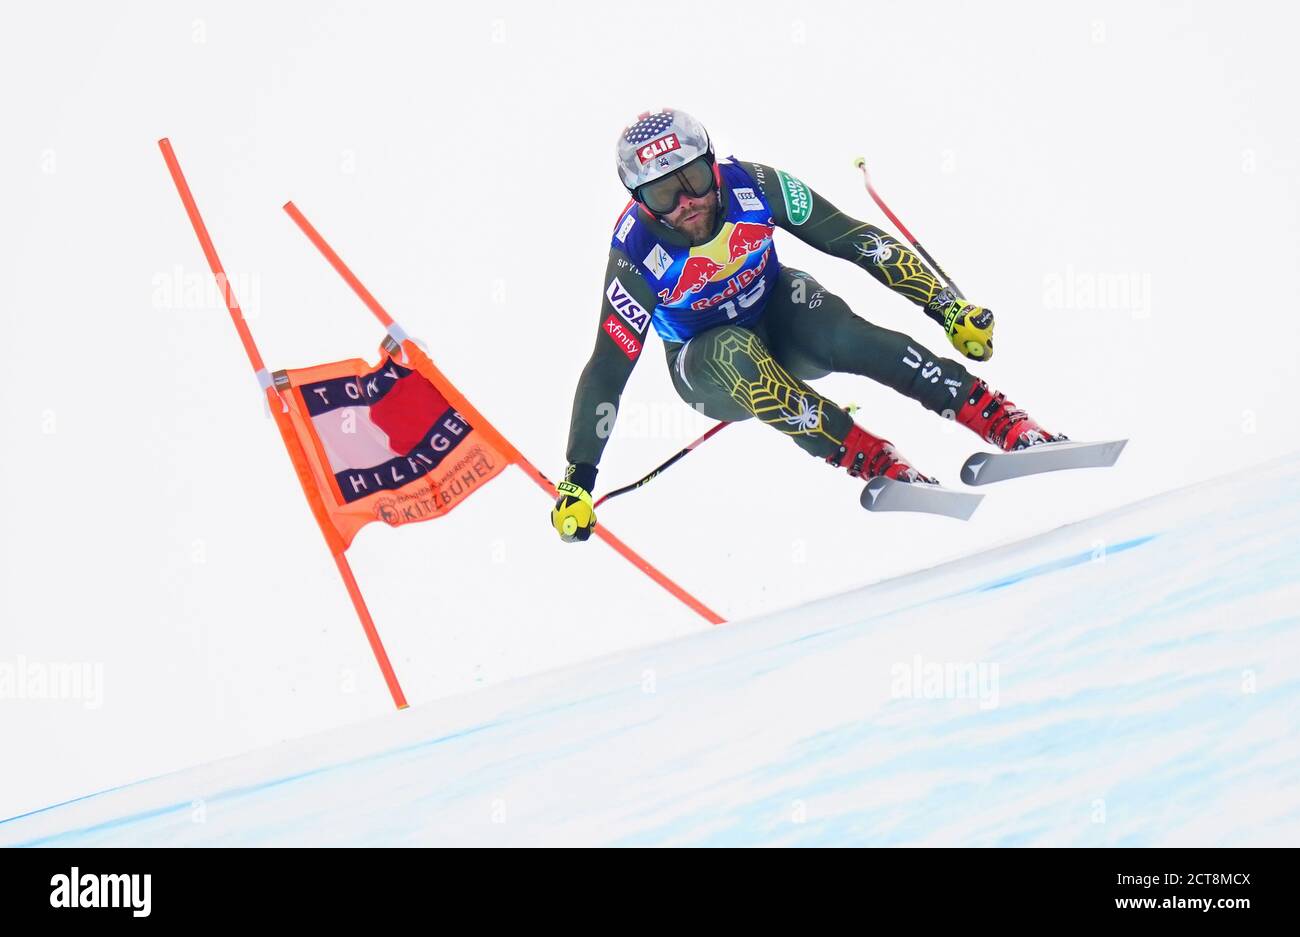 Travis Ganong during the Men's Downhill event for the 2019-20 FIS Alpine Ski World Cup in Kitzbuhel, Austria.  PHOTO CREDIT : © MARK PAIN / ALAMY Stock Photo